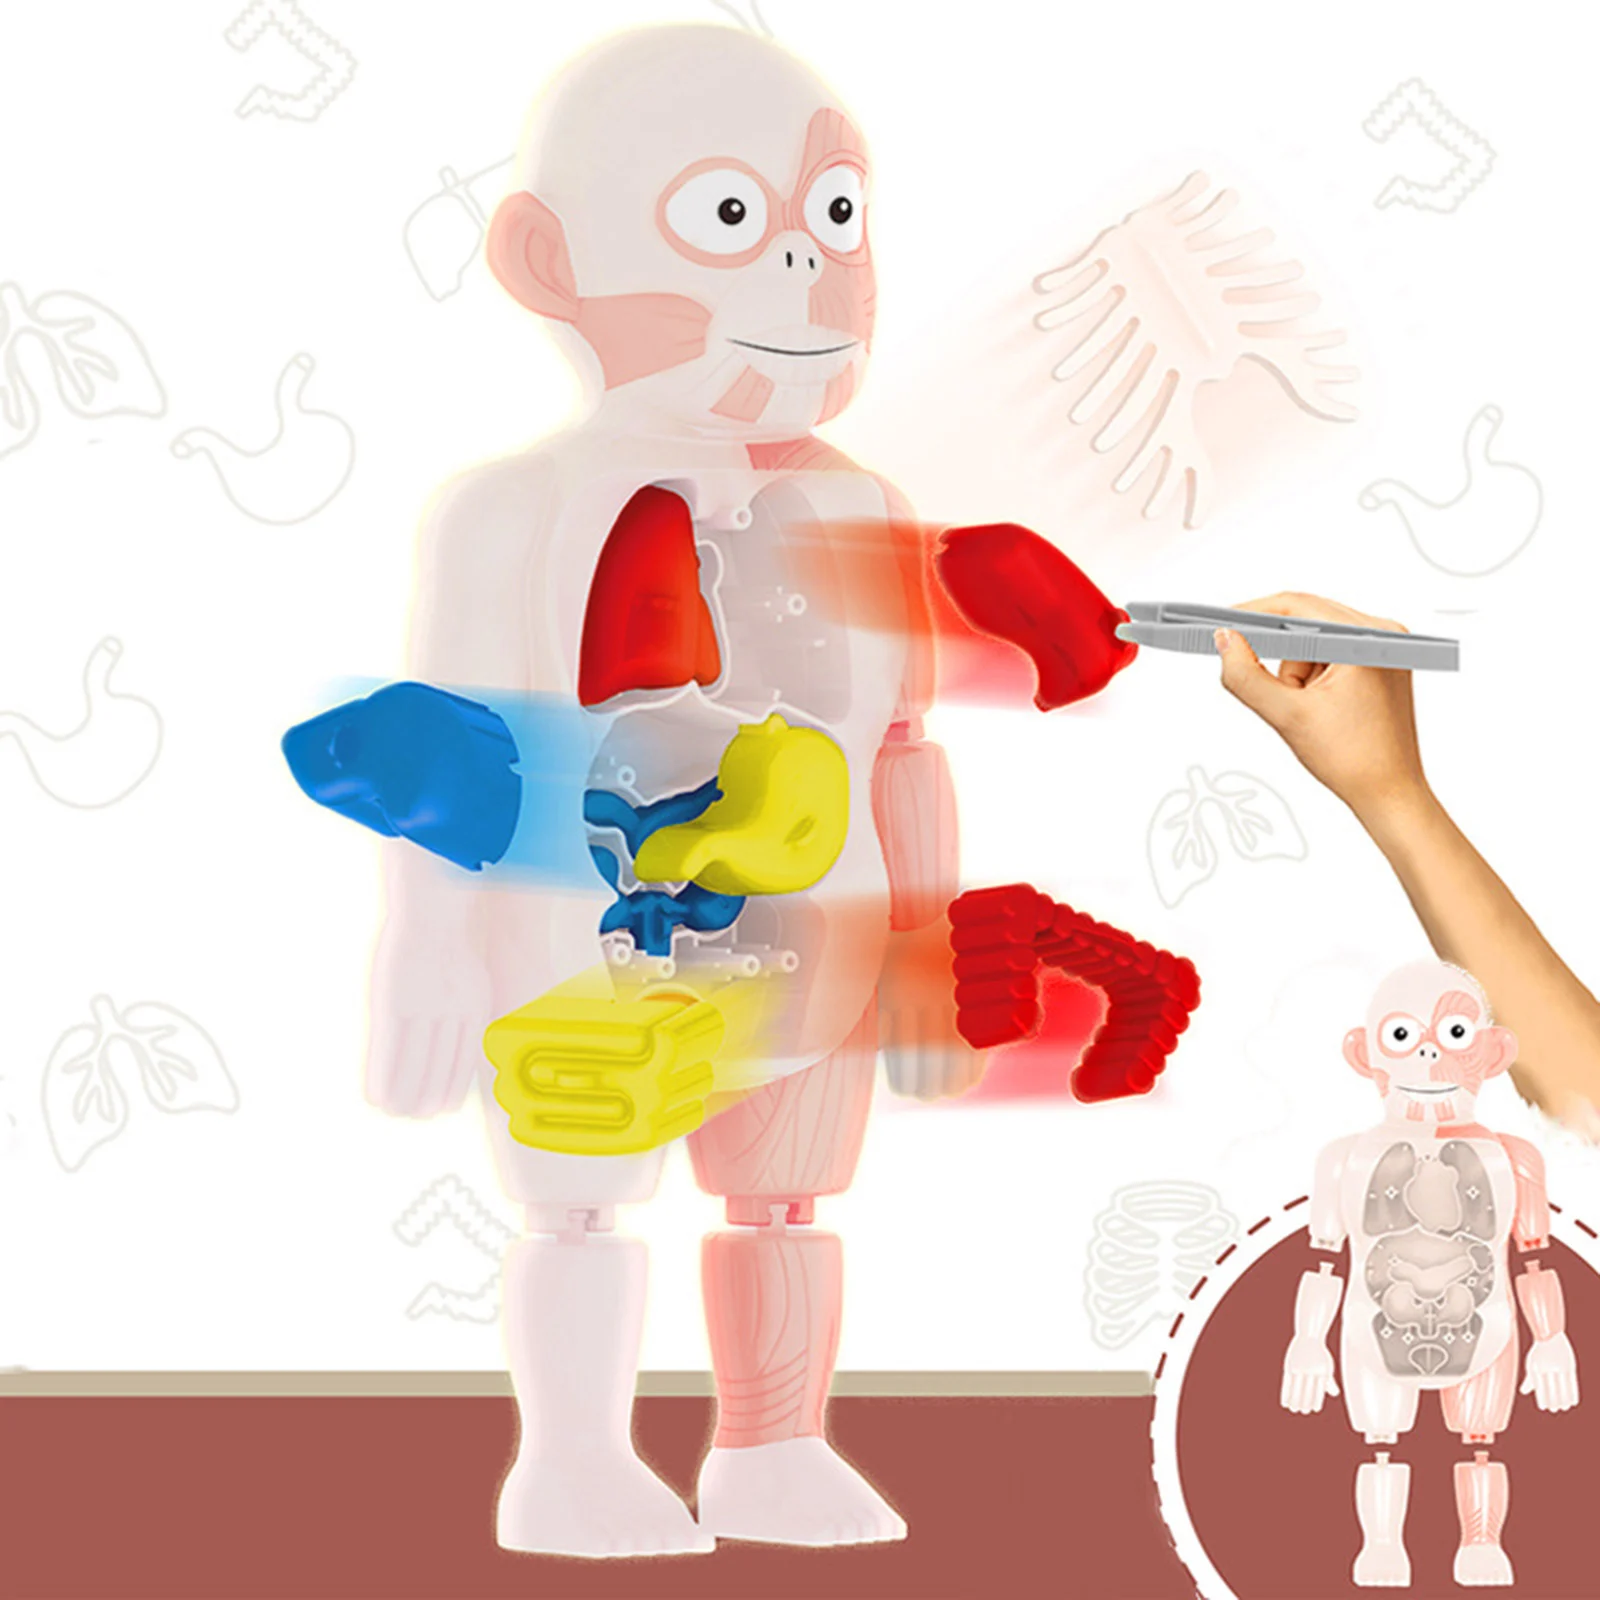 3D Human Body Anatomy Toys Model Kits Plastic for Study Human Organs 9.5x6x24cm